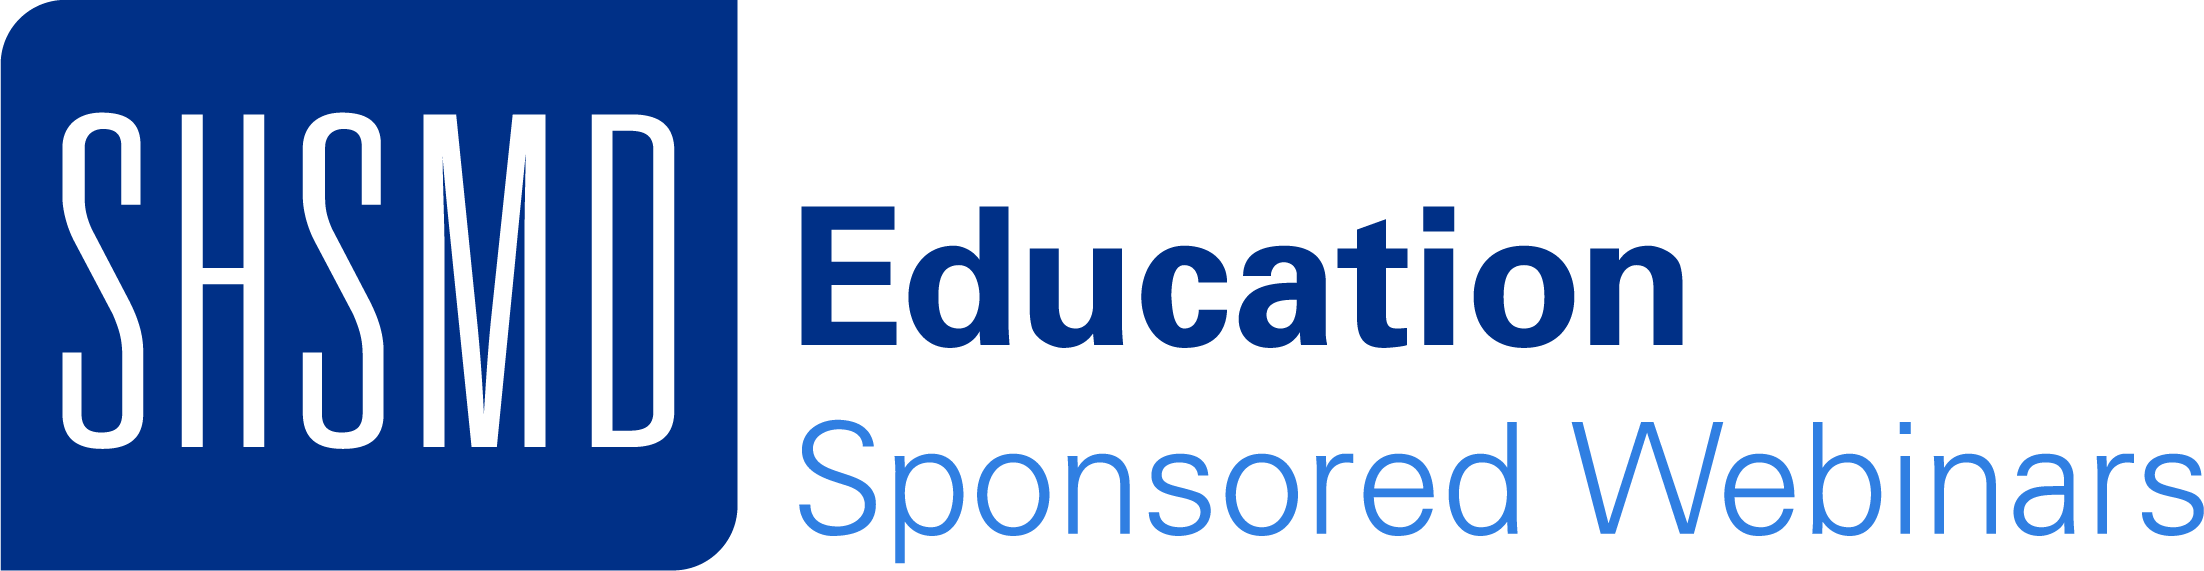 SHSMD education sponsored webinars logo